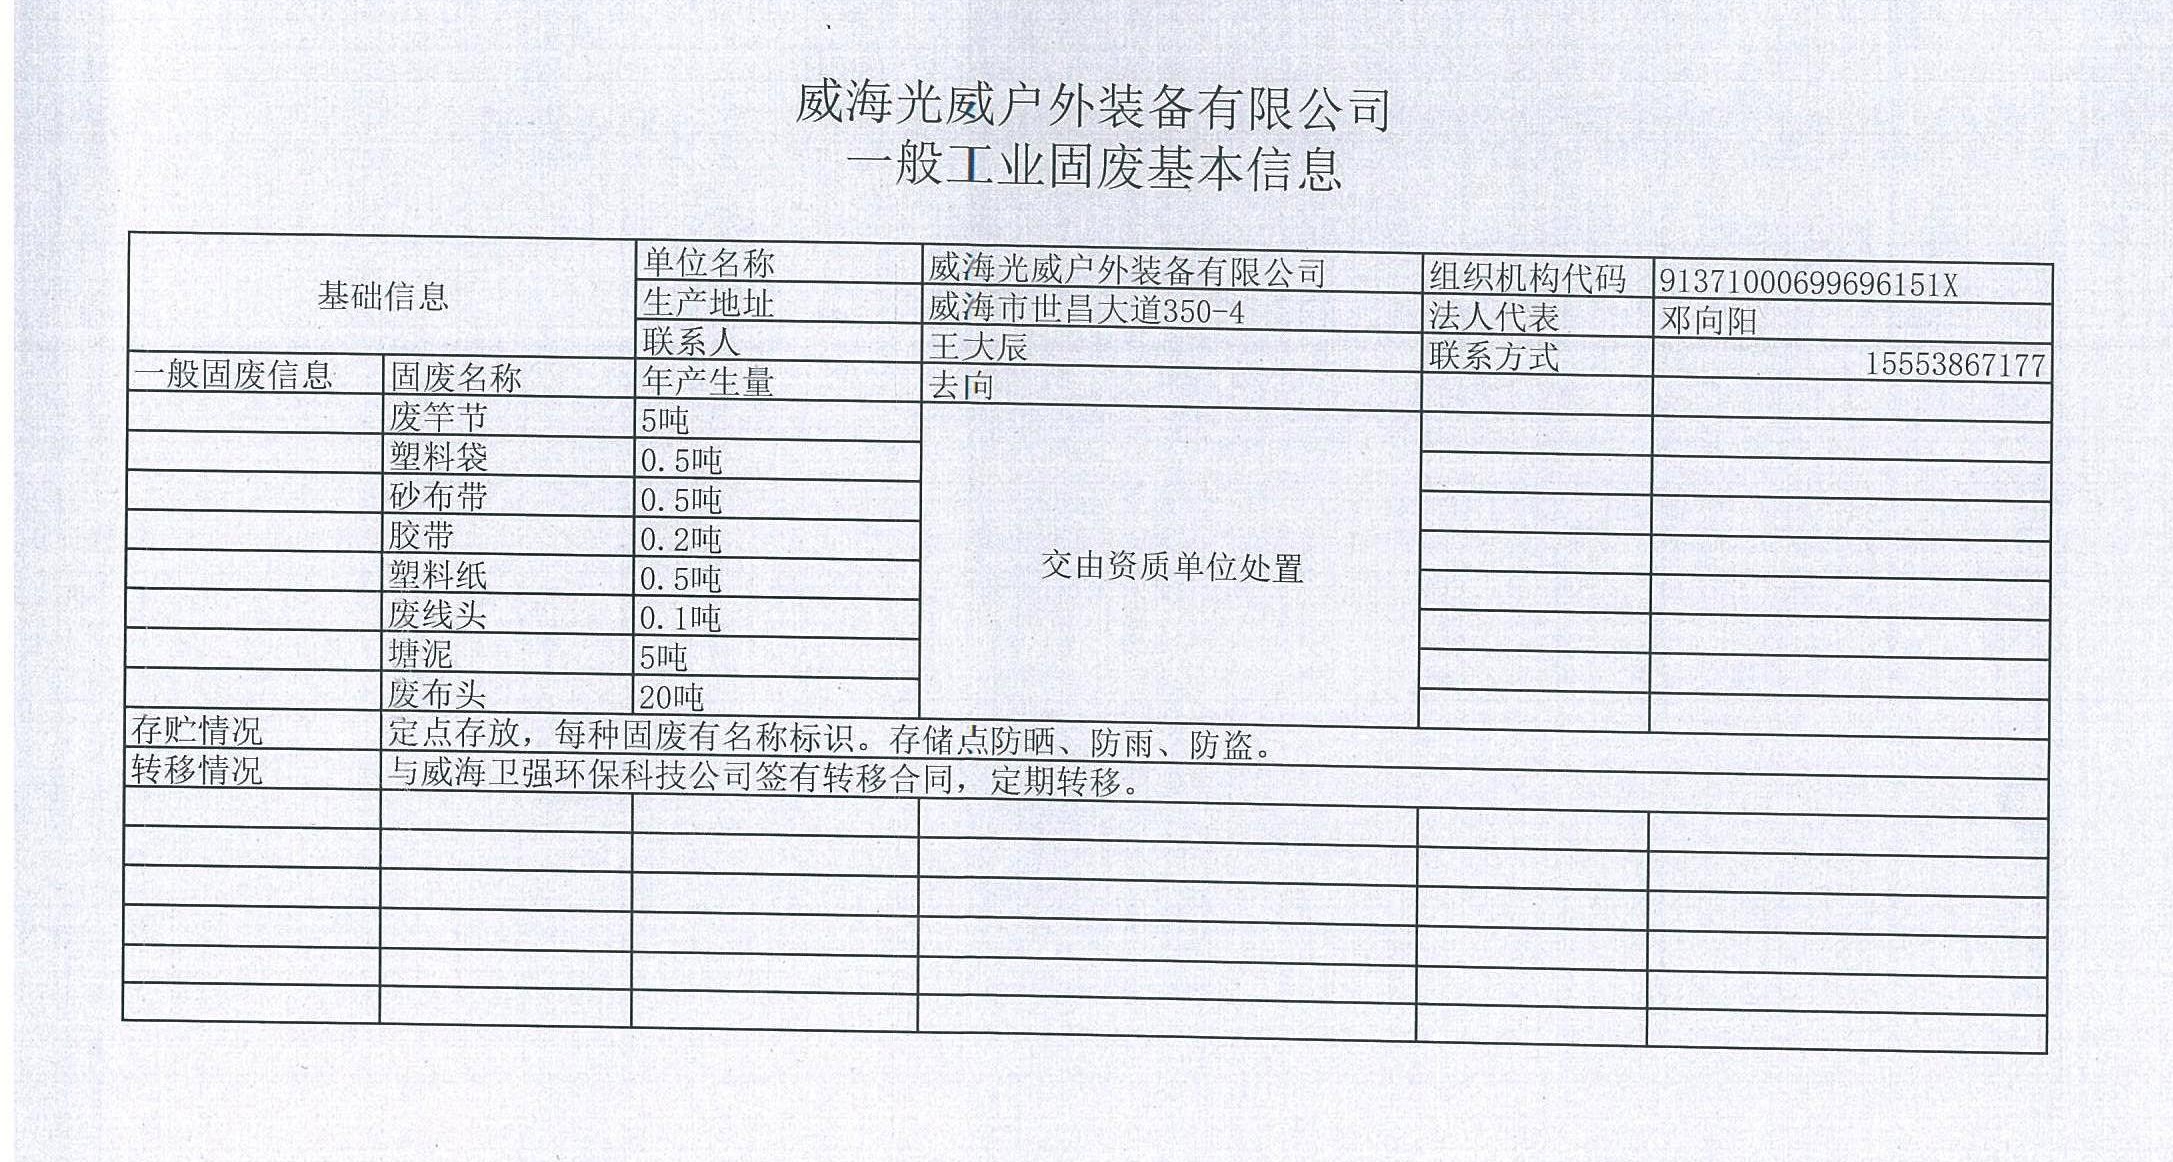 Public Notice | Weihai Guangwei Outdoor Equipment Co., Ltd. General Industrial Solid Waste Basic Information